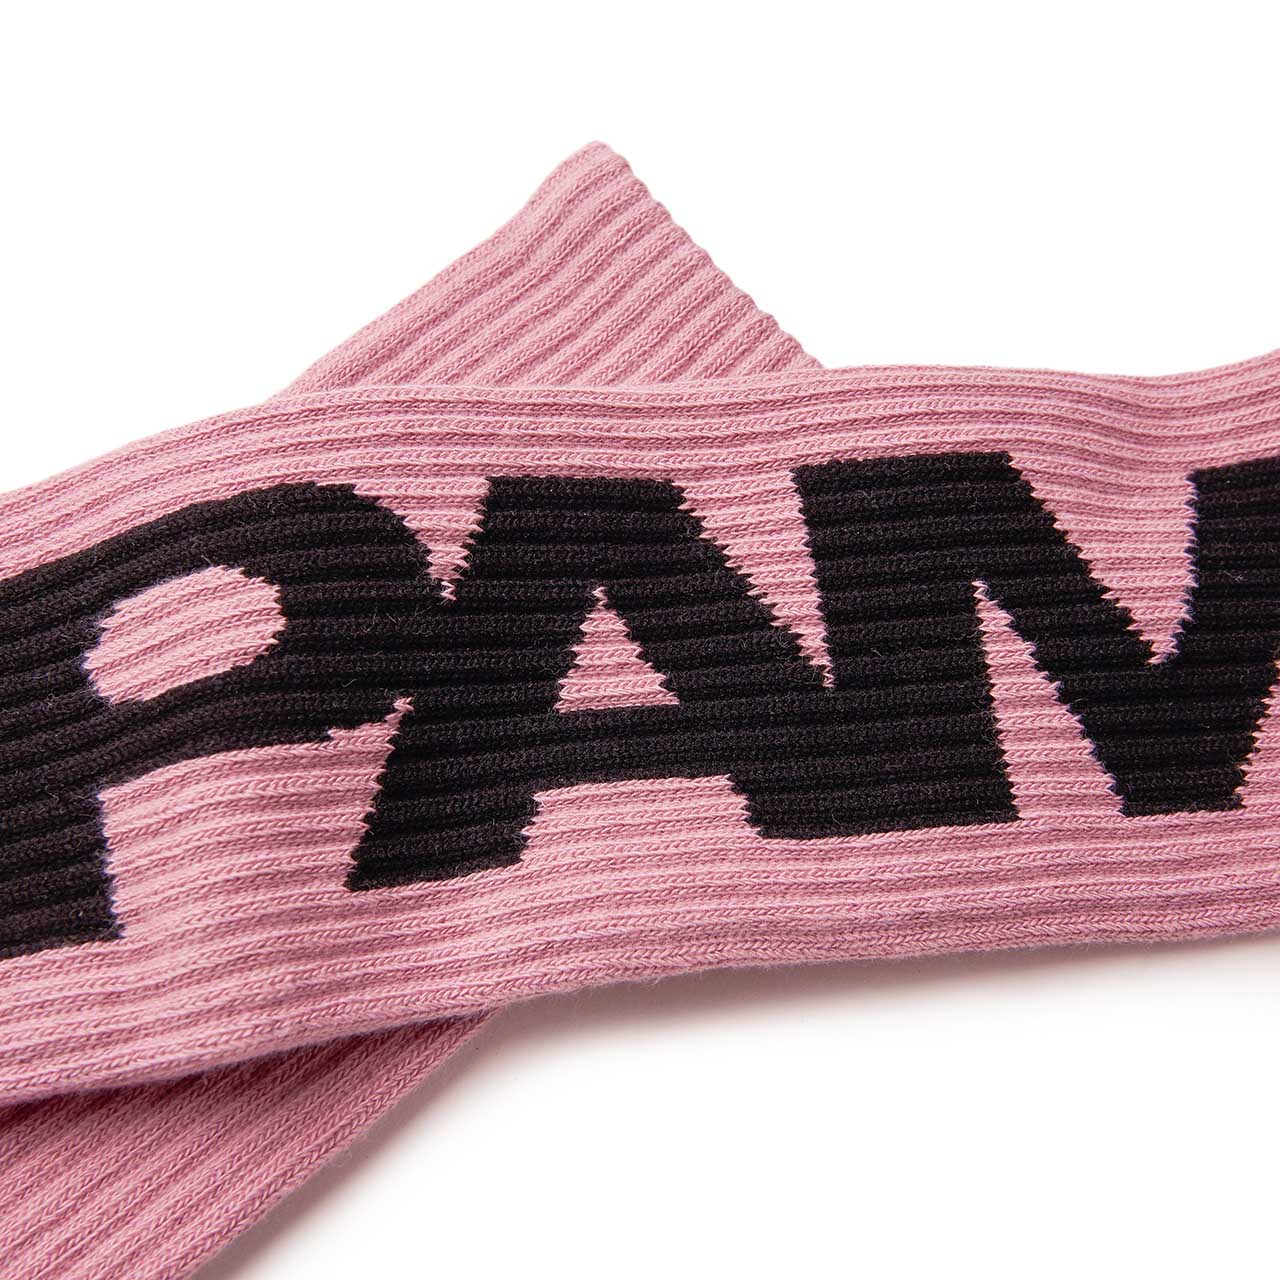 perks and mini b.t.c. socks (pink / grey) - 9705-fsgy - a.plus - Image - 2